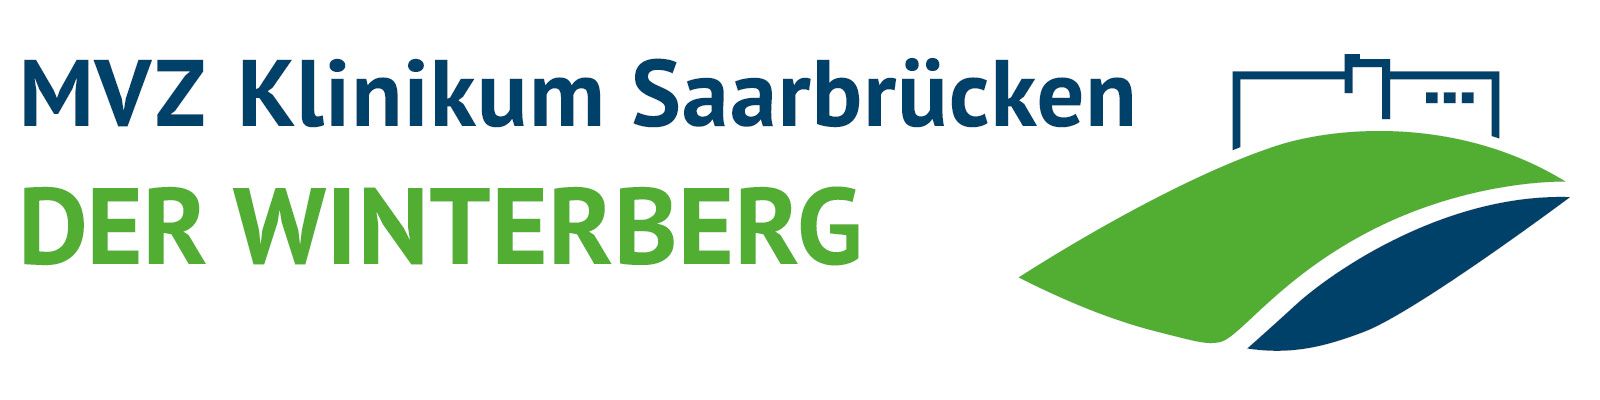 Logo: MVZ Klinikum Saarbrücken - DER WINTERBERG Slider_Logo_MVZ.jpg